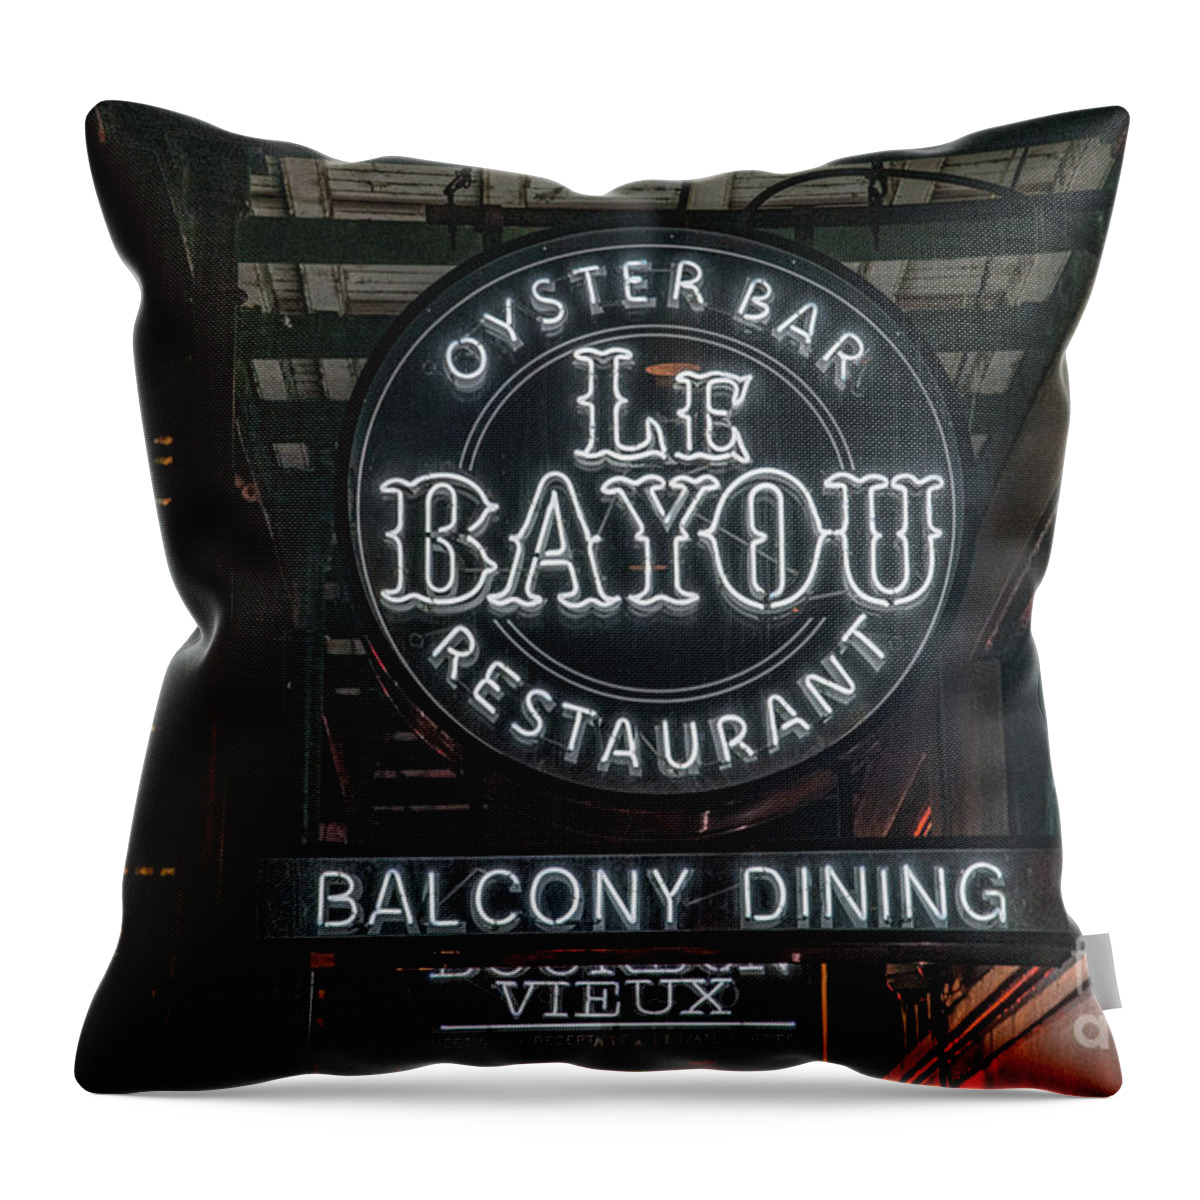 Le Bayou Oyster Bar Restaurant Throw Pillow featuring the photograph Le Bayou Oyster Bar Restaurant by FineArtRoyal Joshua Mimbs